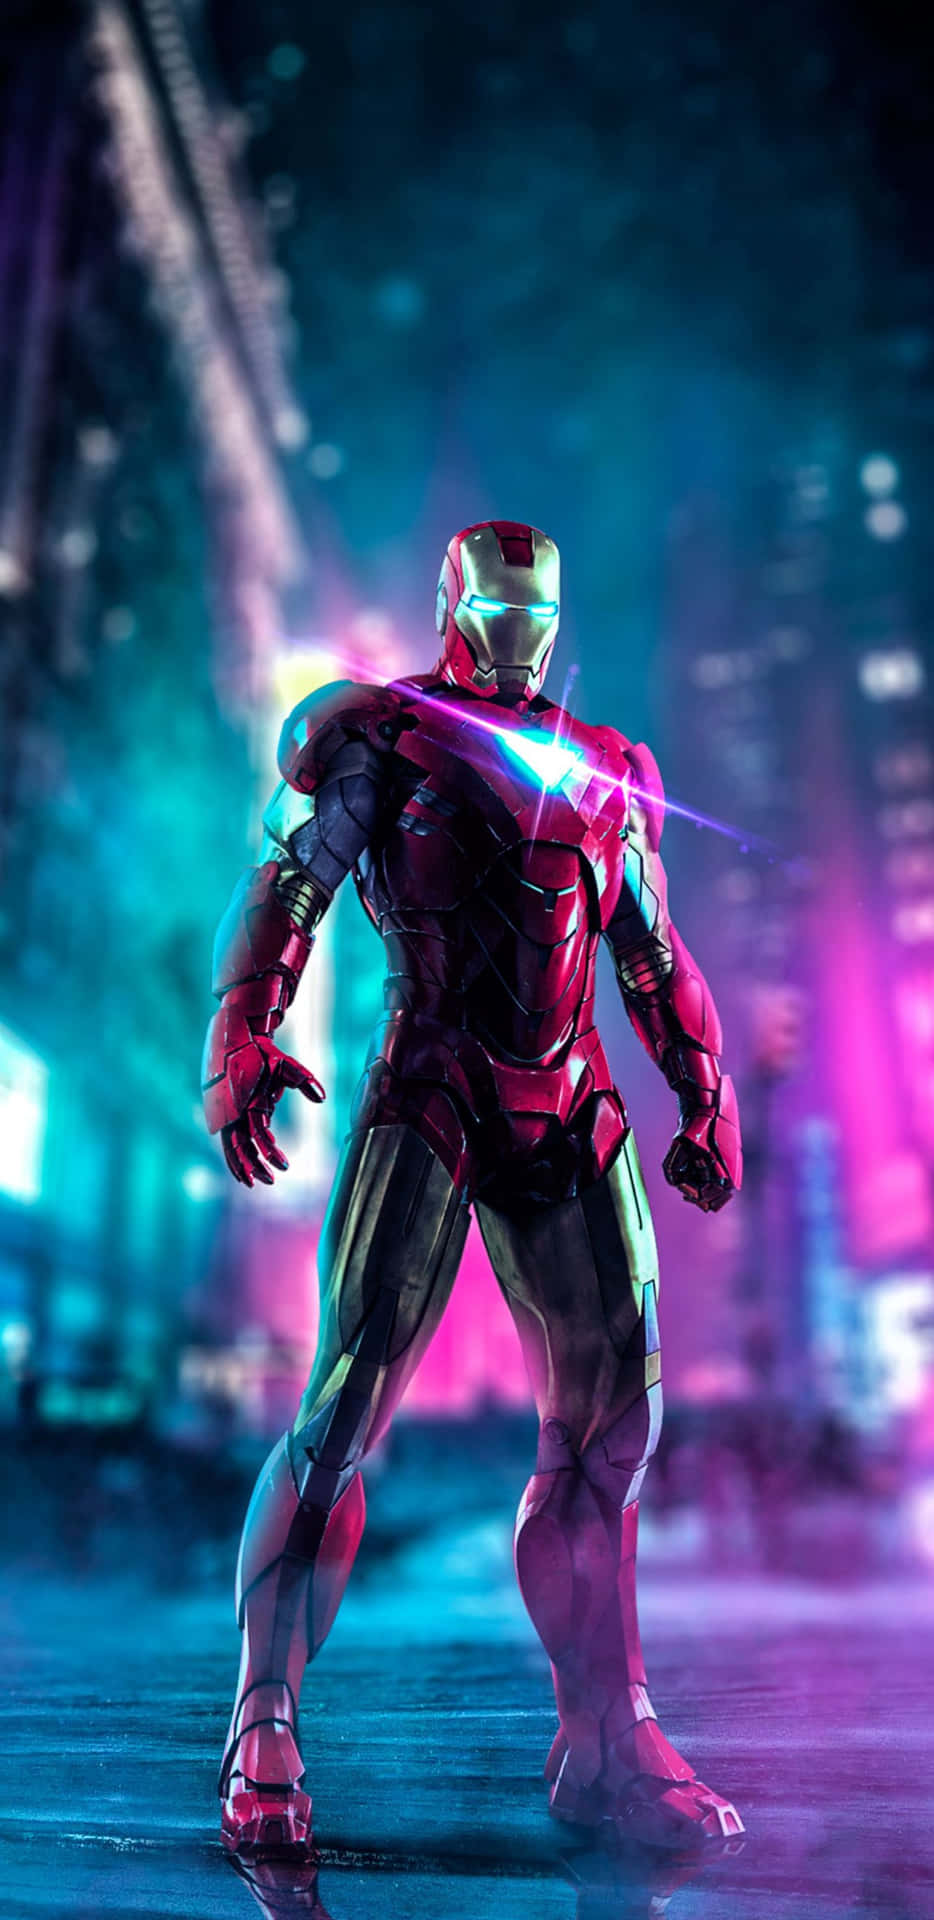 Download 1080p Hd Iron Man Endgame Movie Poster Wallpaper  Wallpaperscom